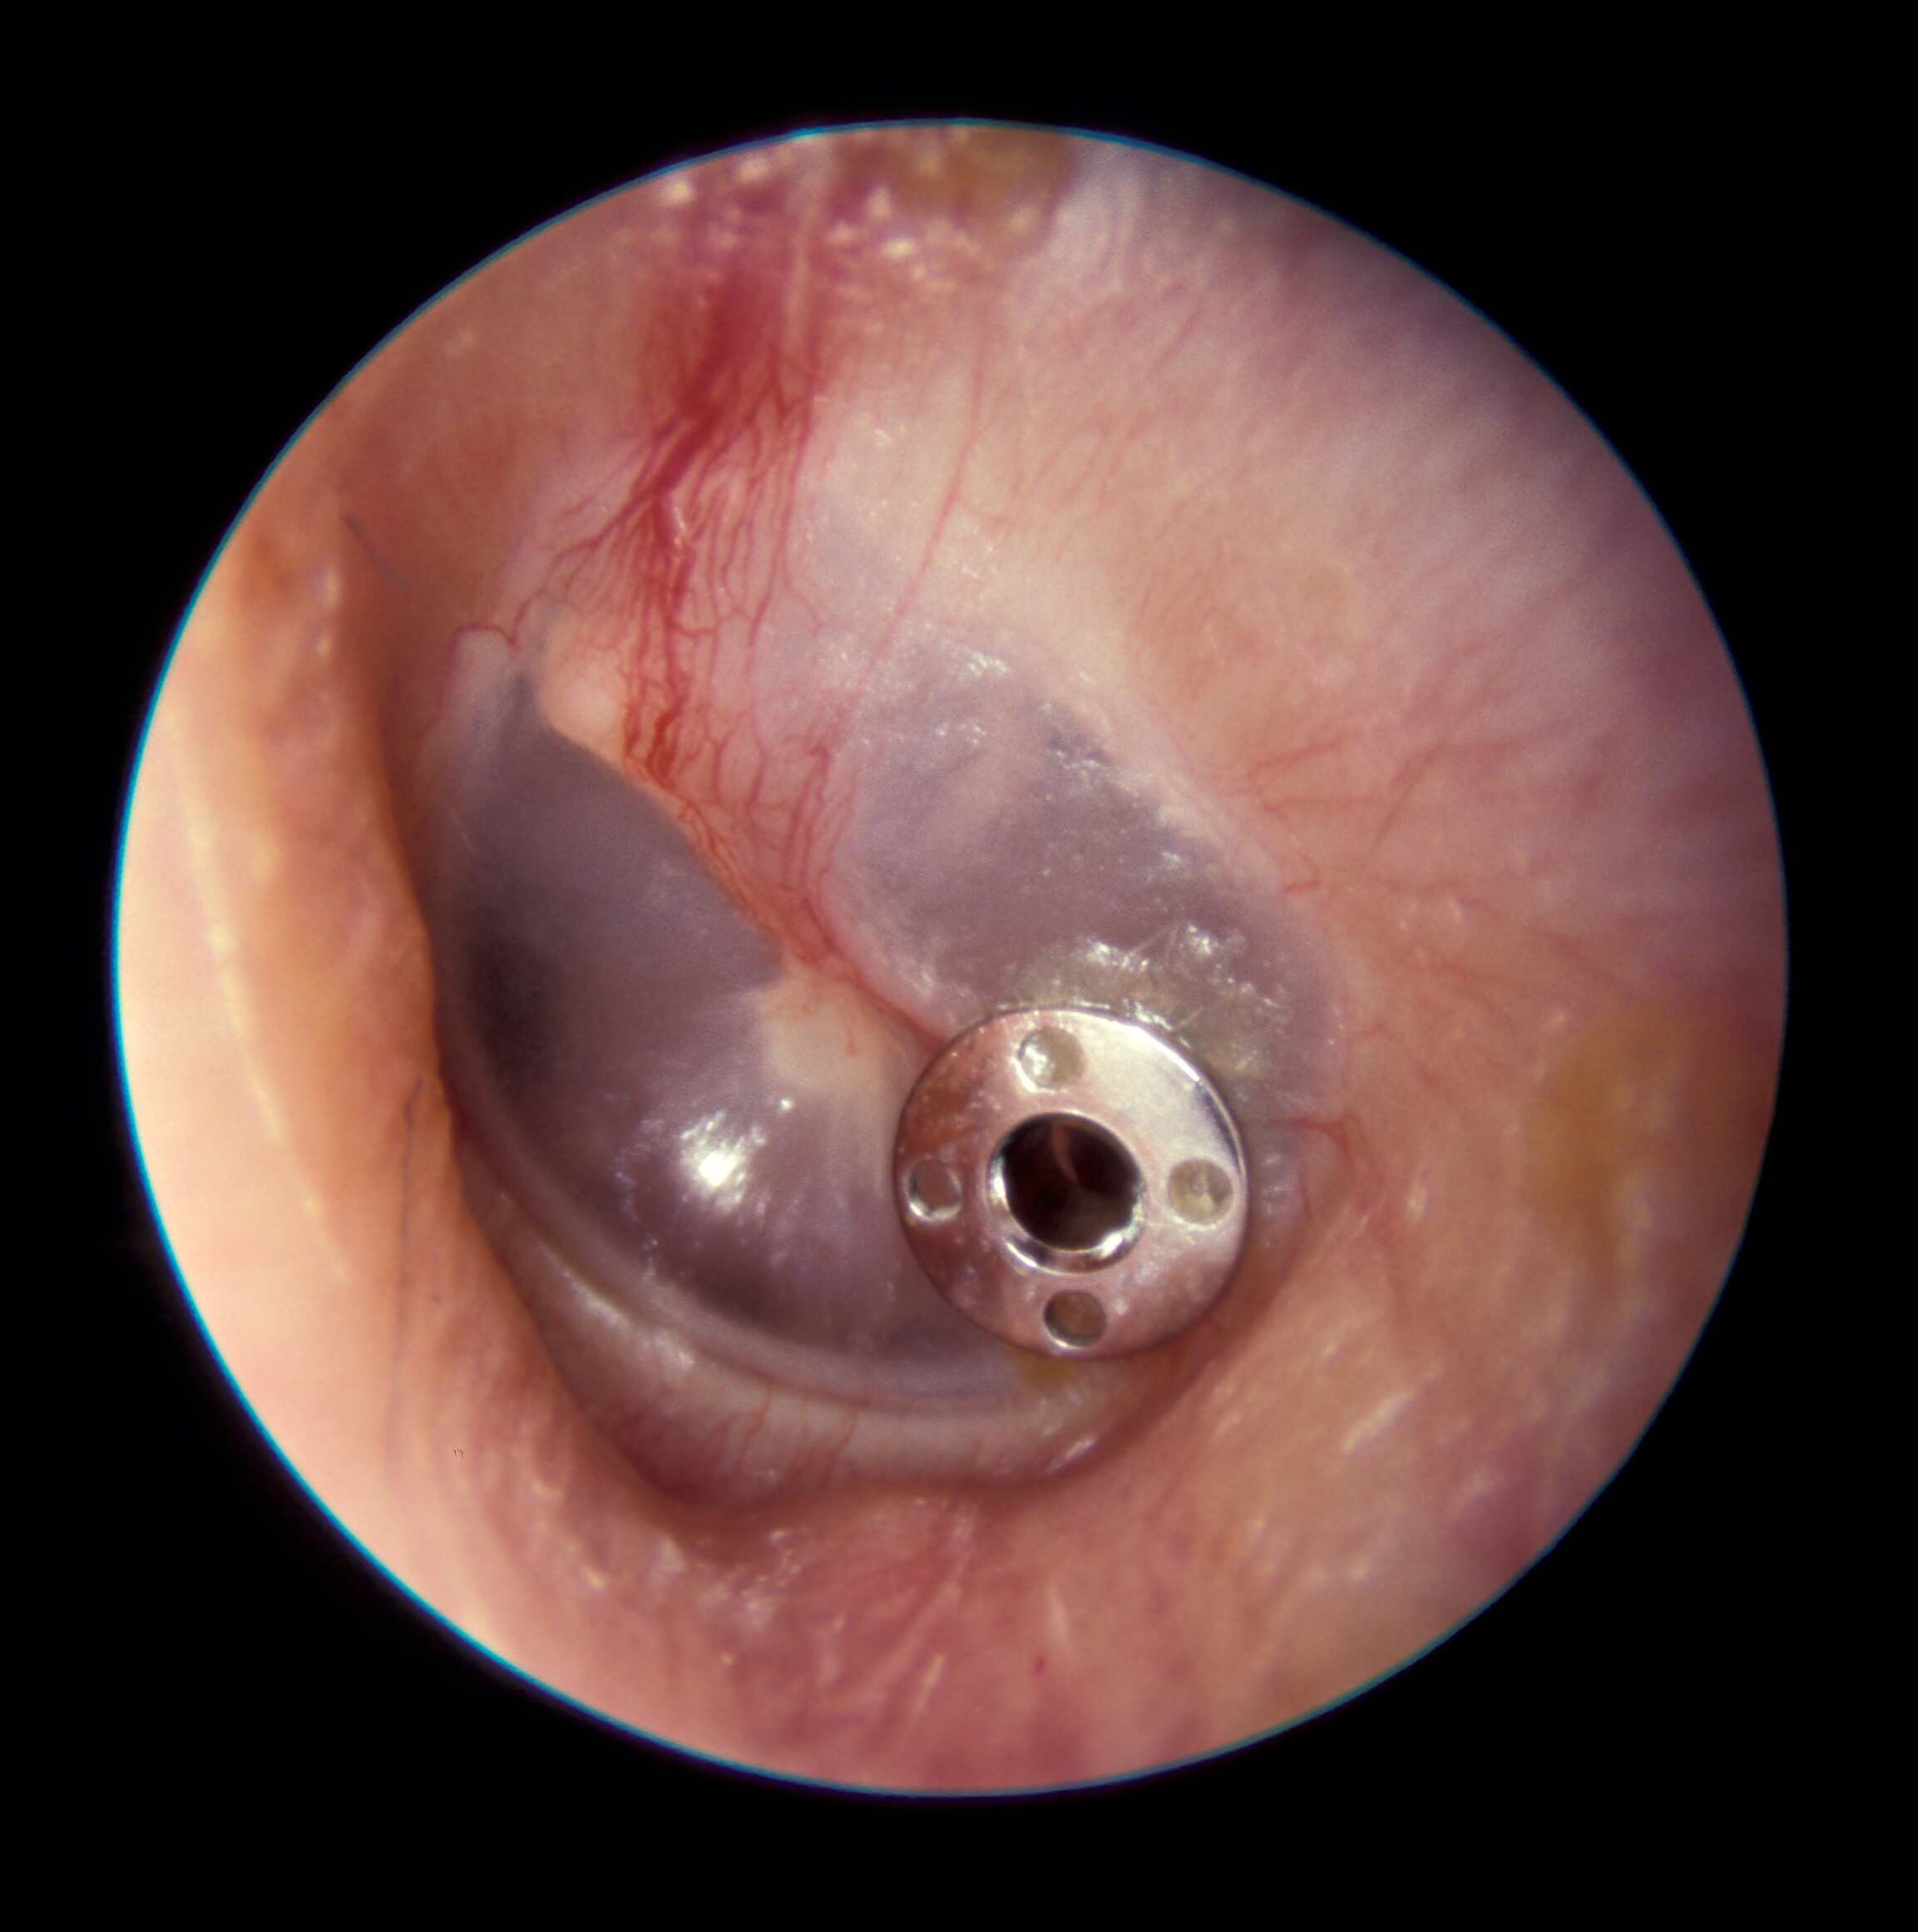 Myringotomy (Ear Surgery) in Iran